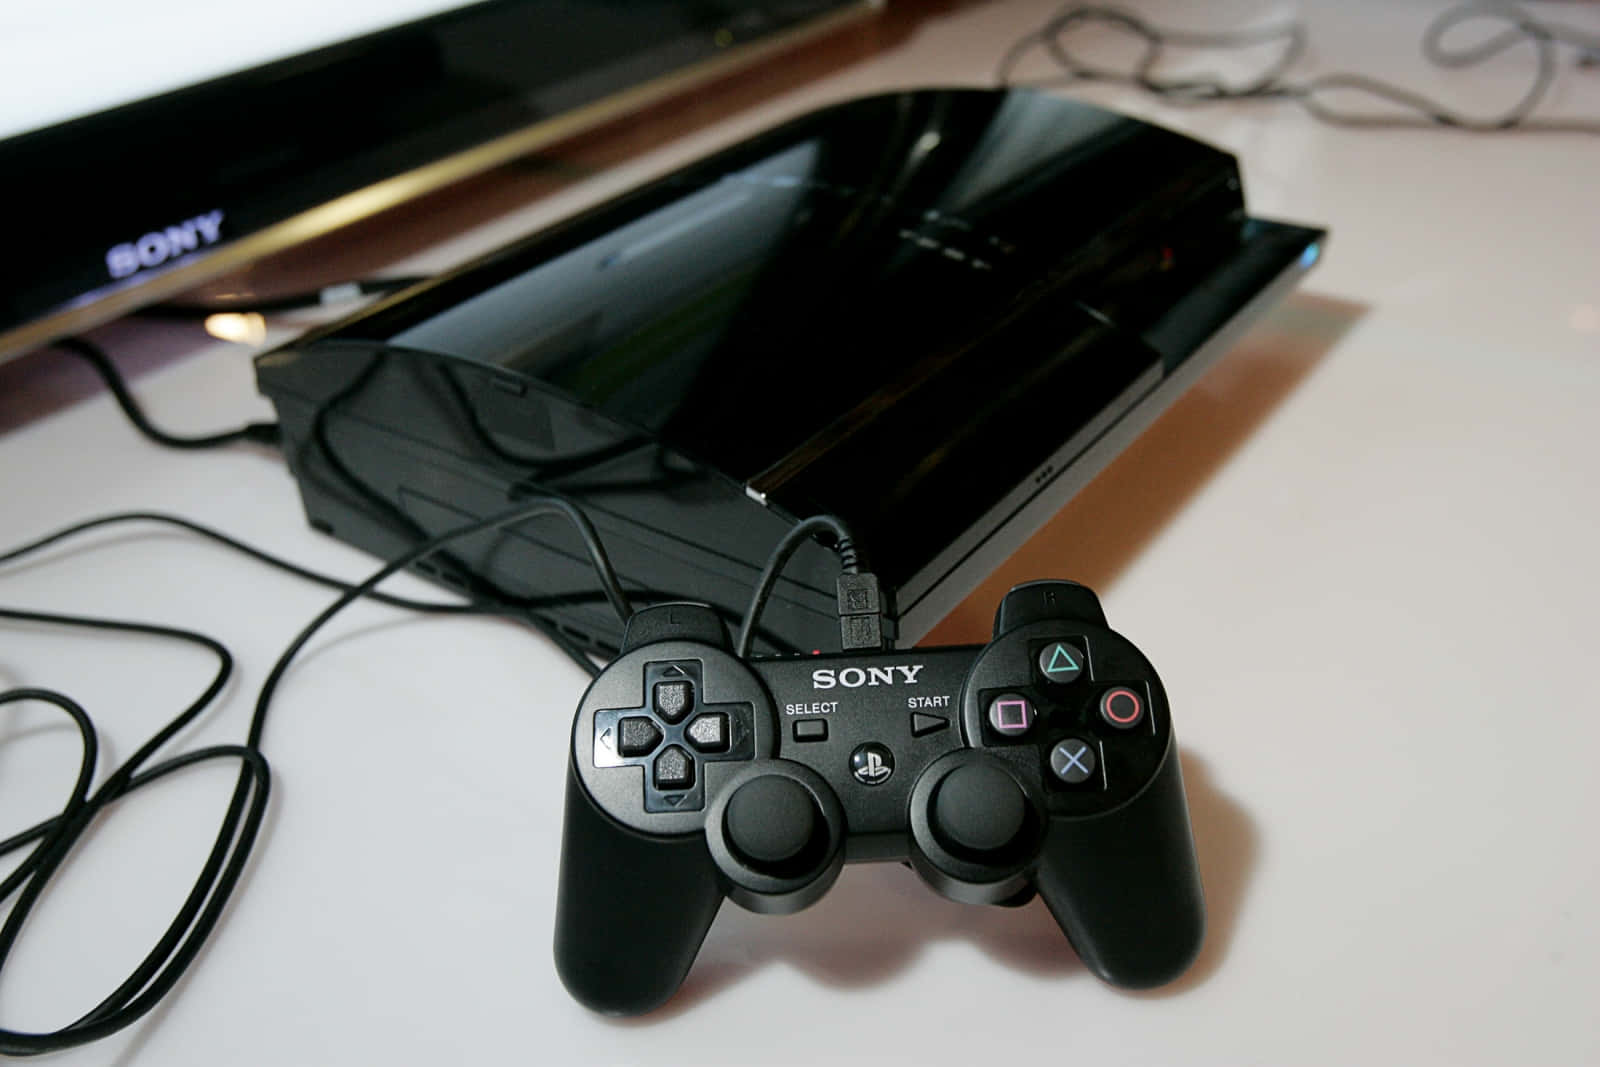 A Black Playstation 3